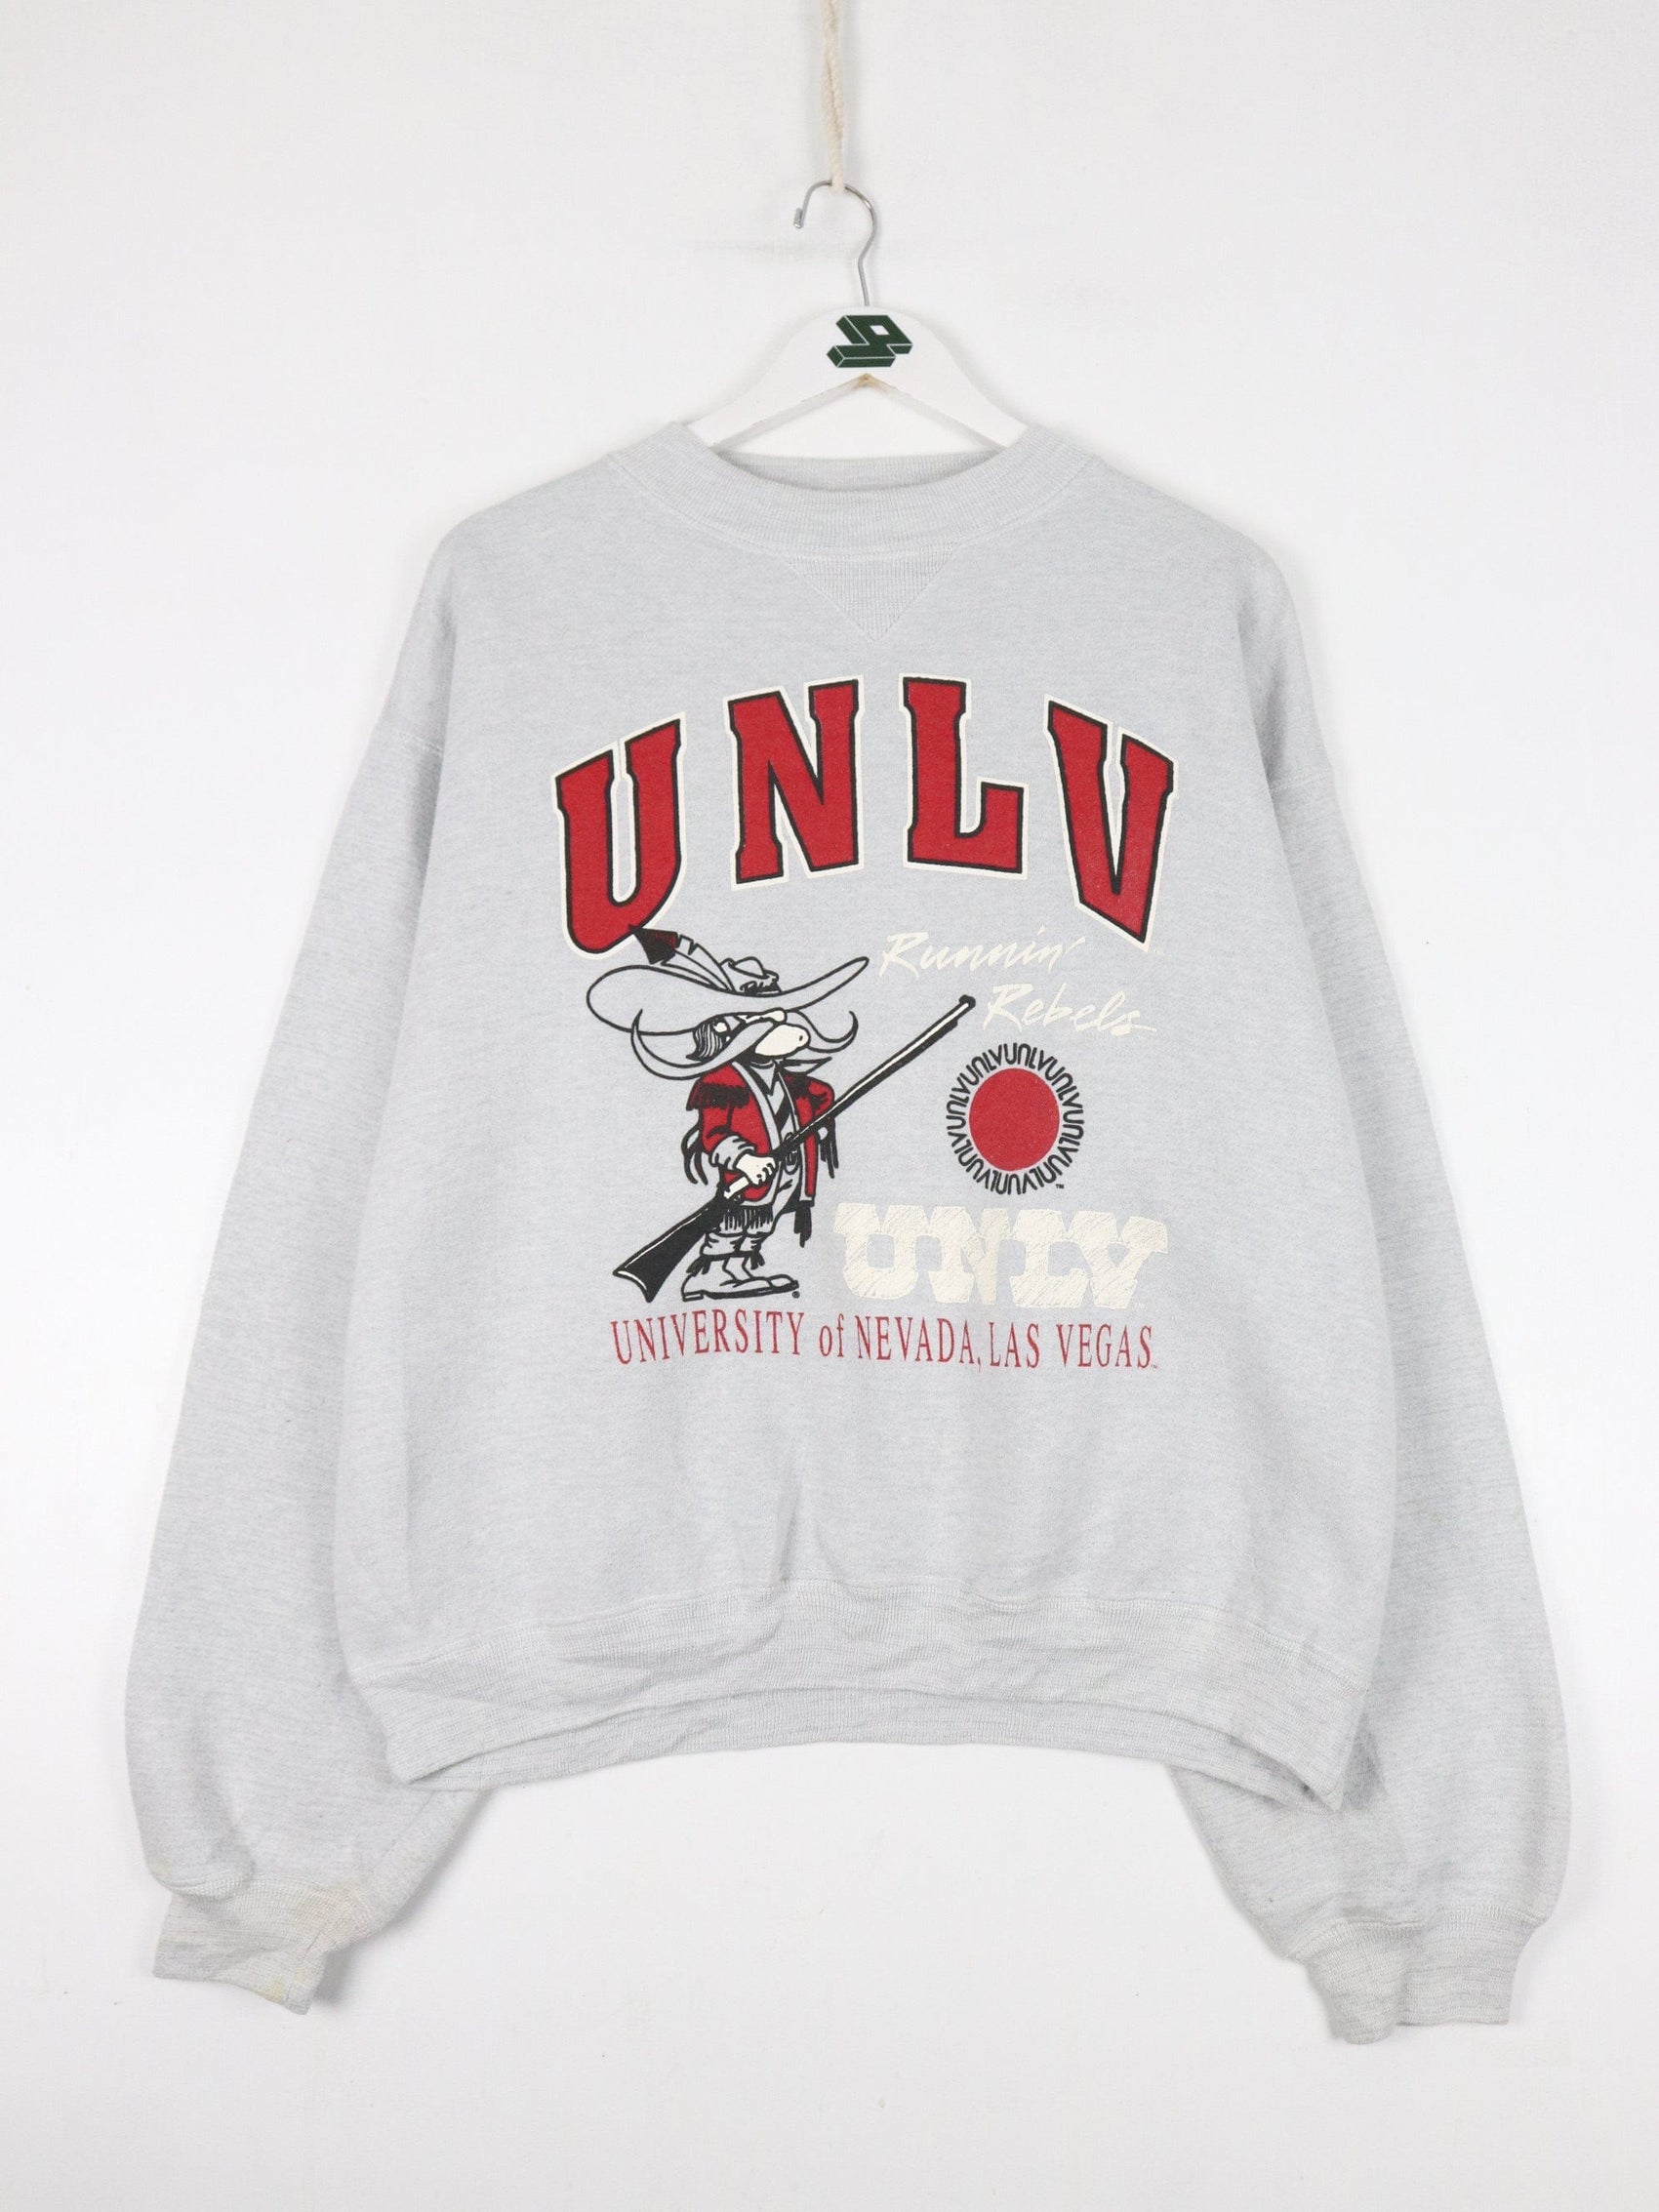 Collegiate Sweatshirts & Hoodies Vintage UNLV Sweatshirt Mens XL Grey College